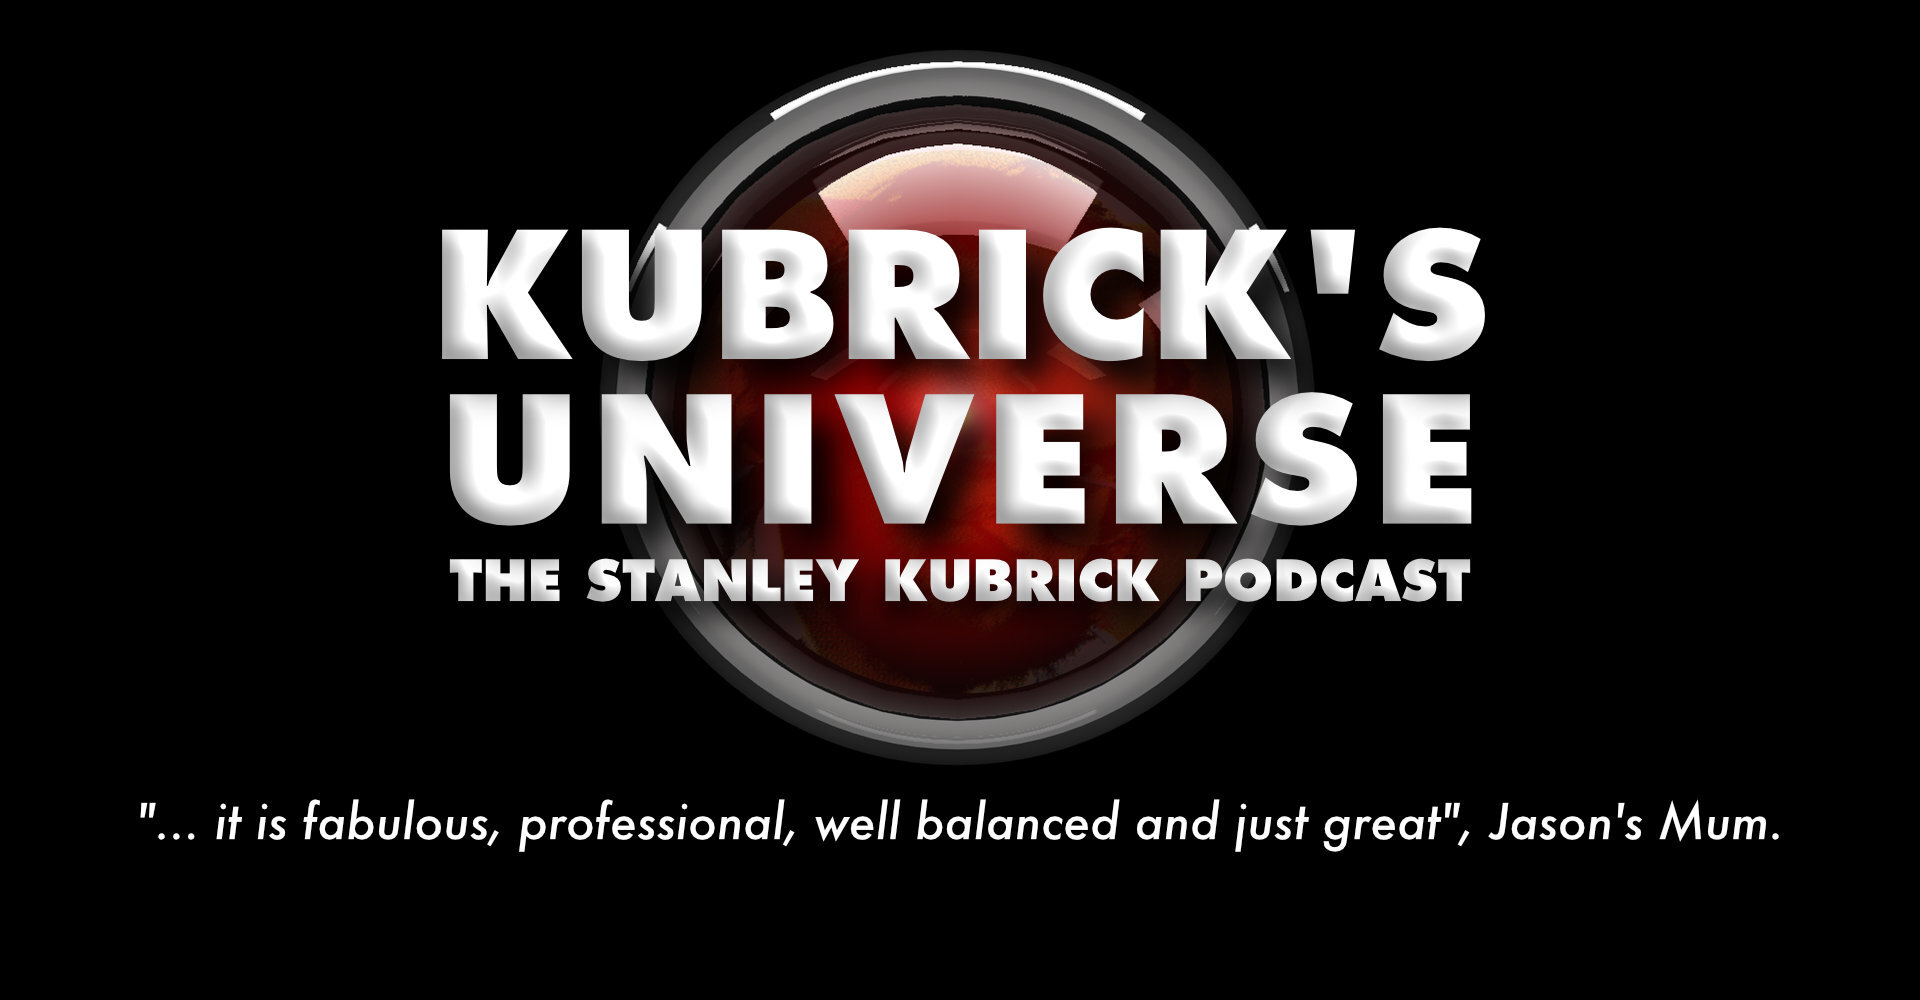 Kubrick’s Universe - The Stanley Kubrick Podcast header image 1